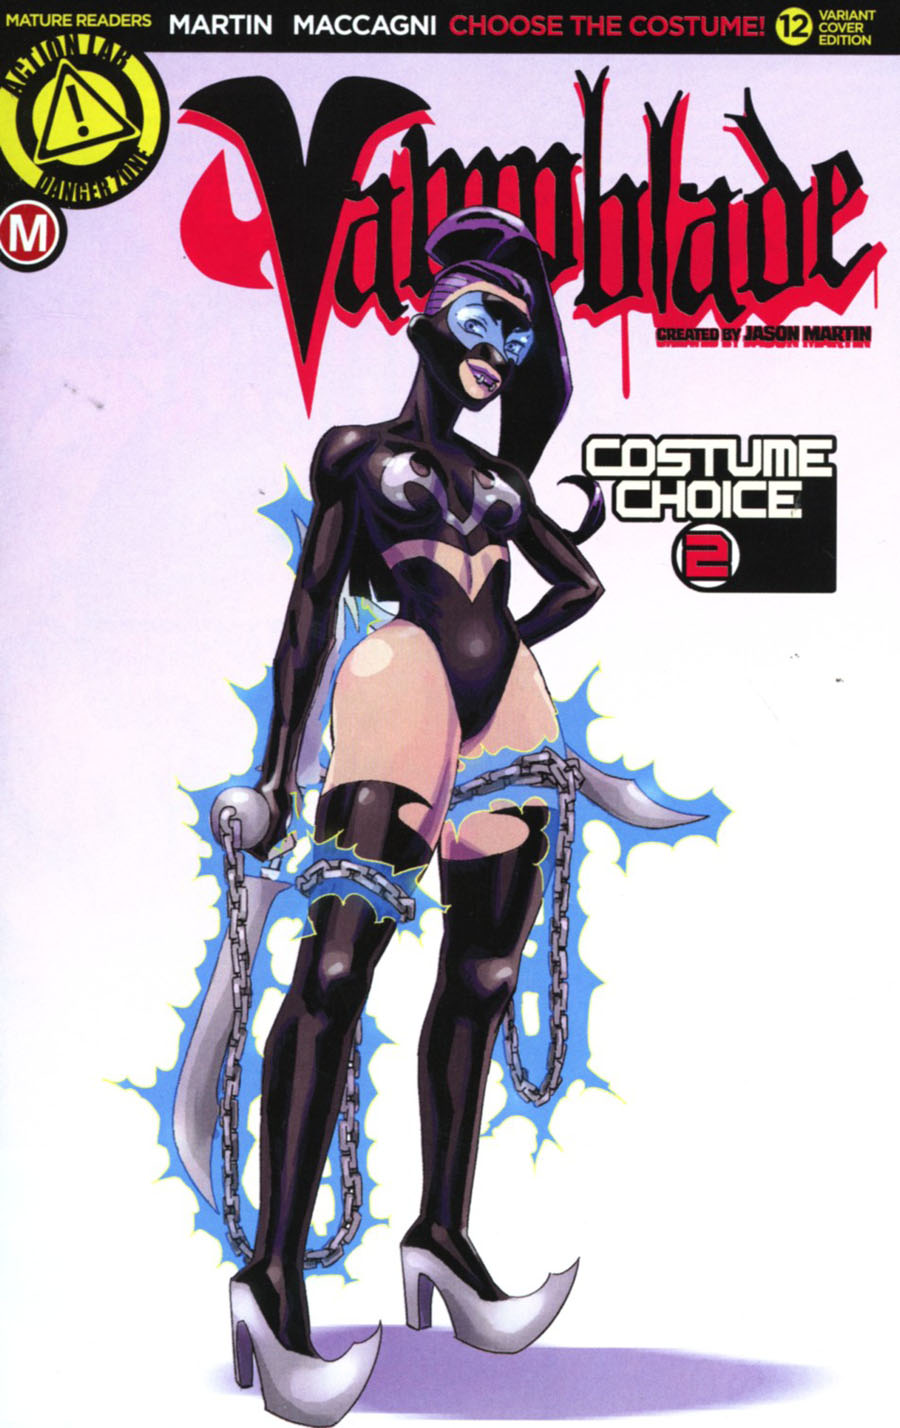 Vampblade #12 Cover E Variant Costume Choice 2 Cover